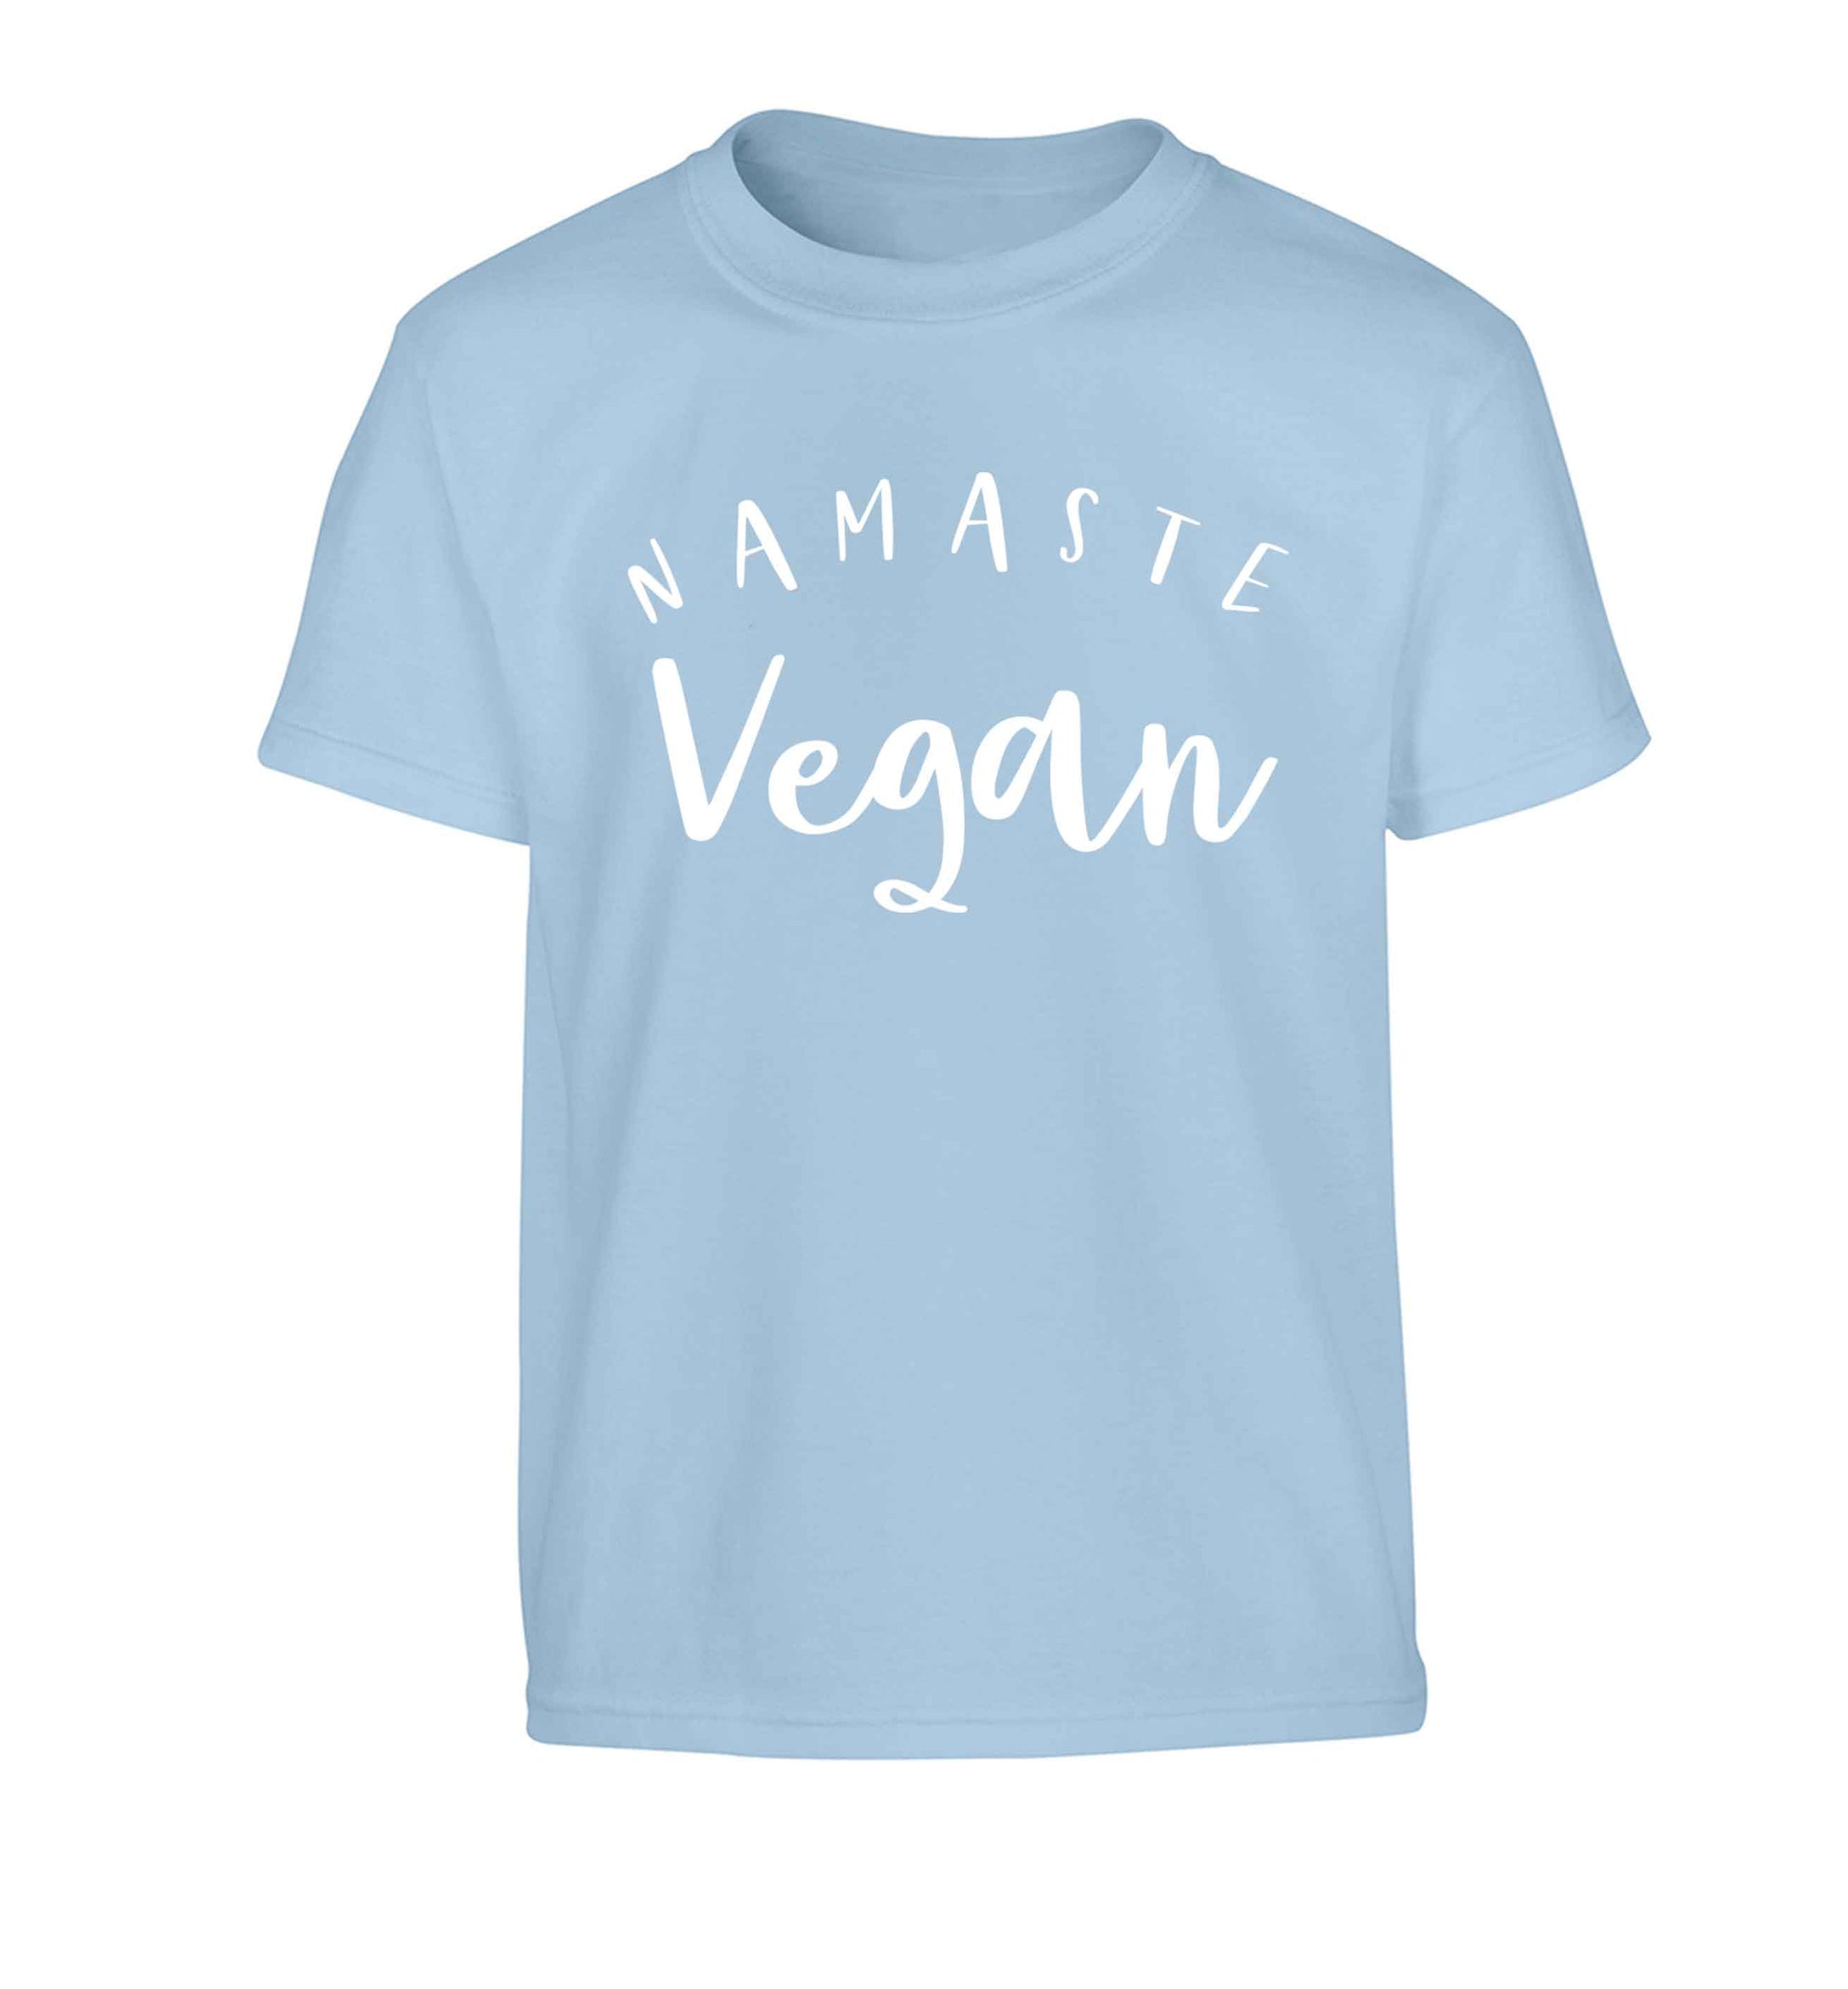 Namaste vegan Children's light blue Tshirt 12-13 Years